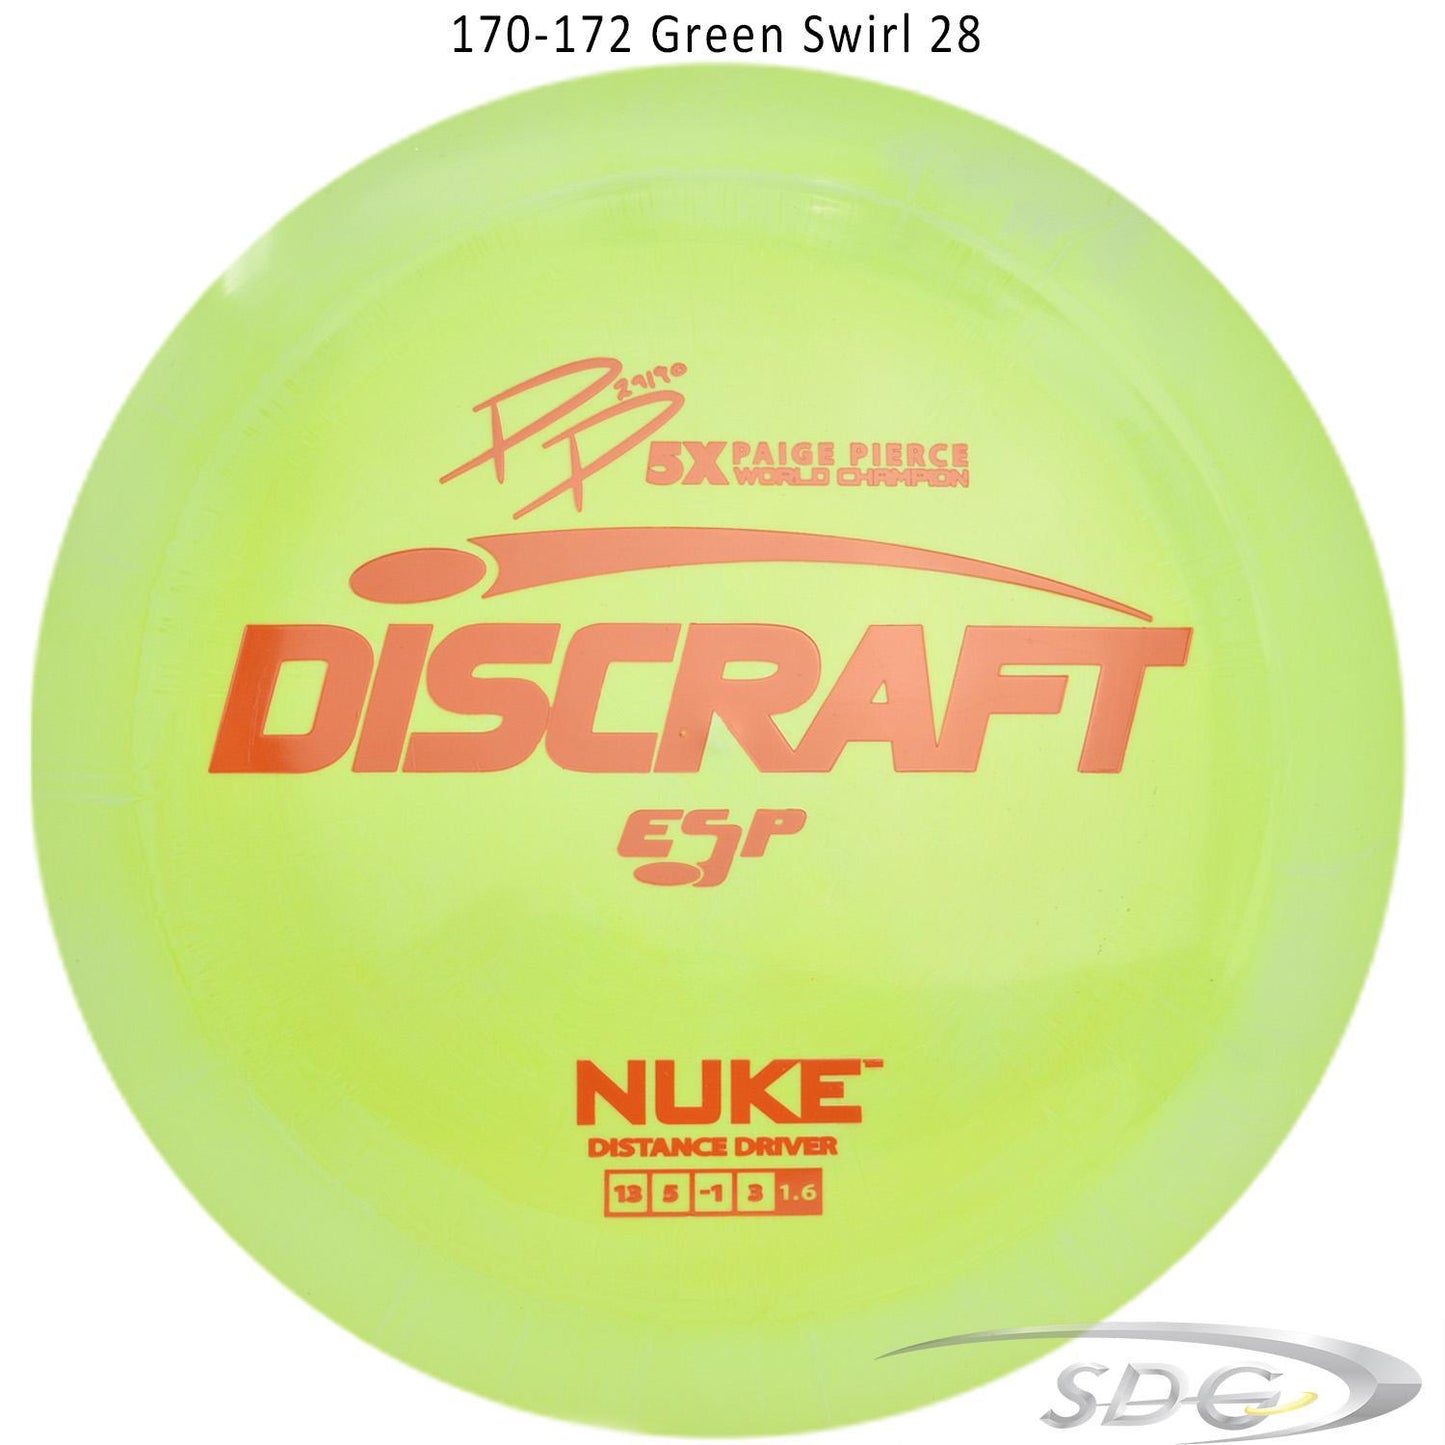 discraft-esp-nuke-paige-pierce-signature-disc-golf-distance-driver 170-172 Green Swirl 28